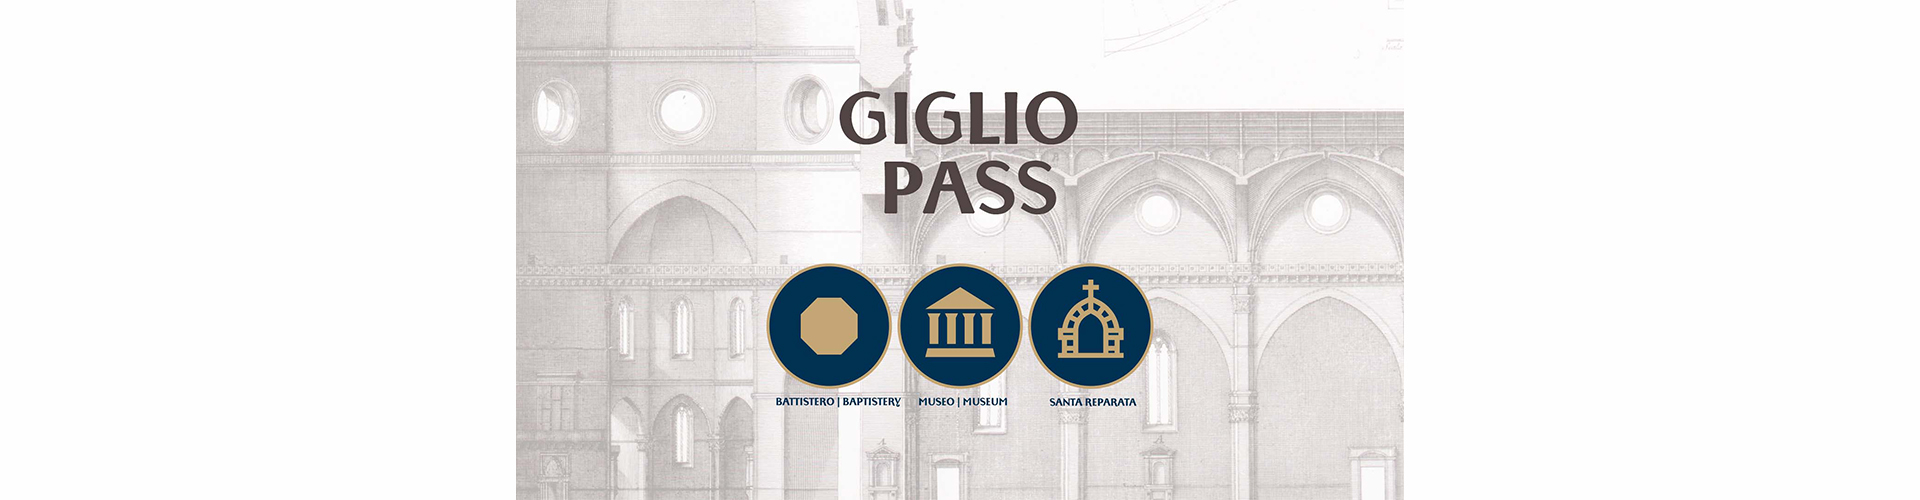 Giglio Pass 1920 x 500